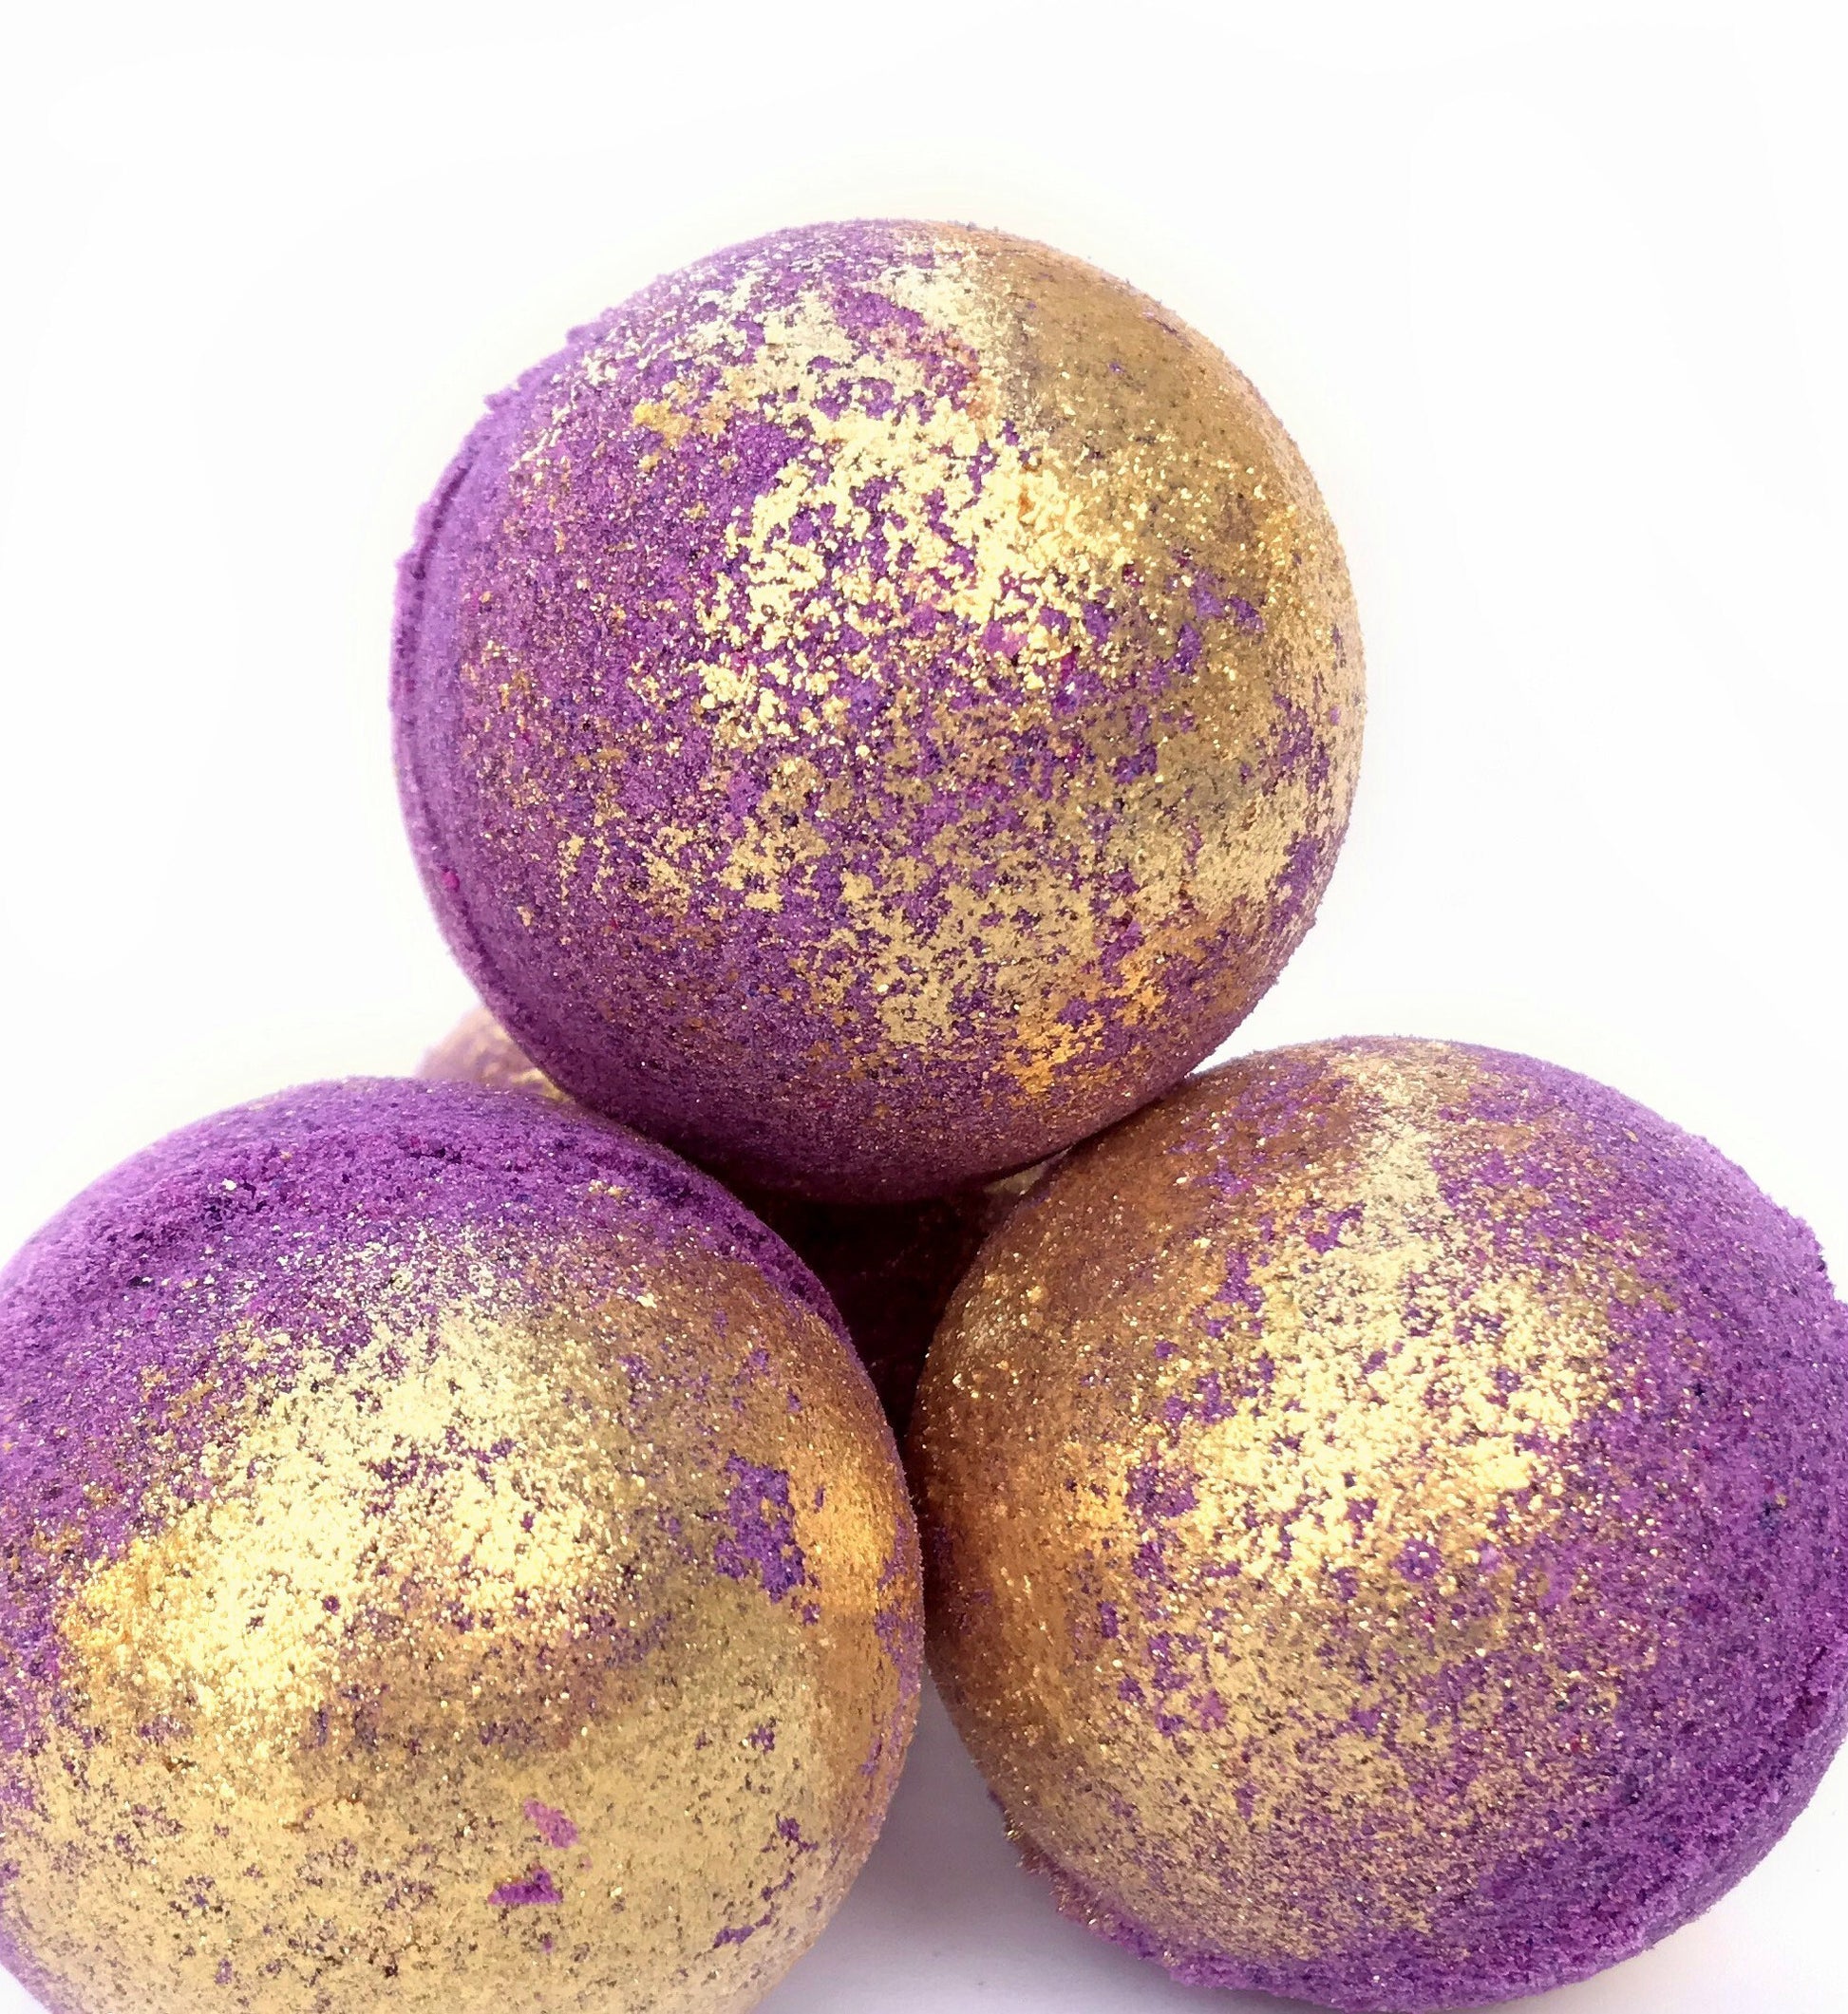 Three eclipse (purple bath bomb with gold eco-glitter) bath bombs stacked